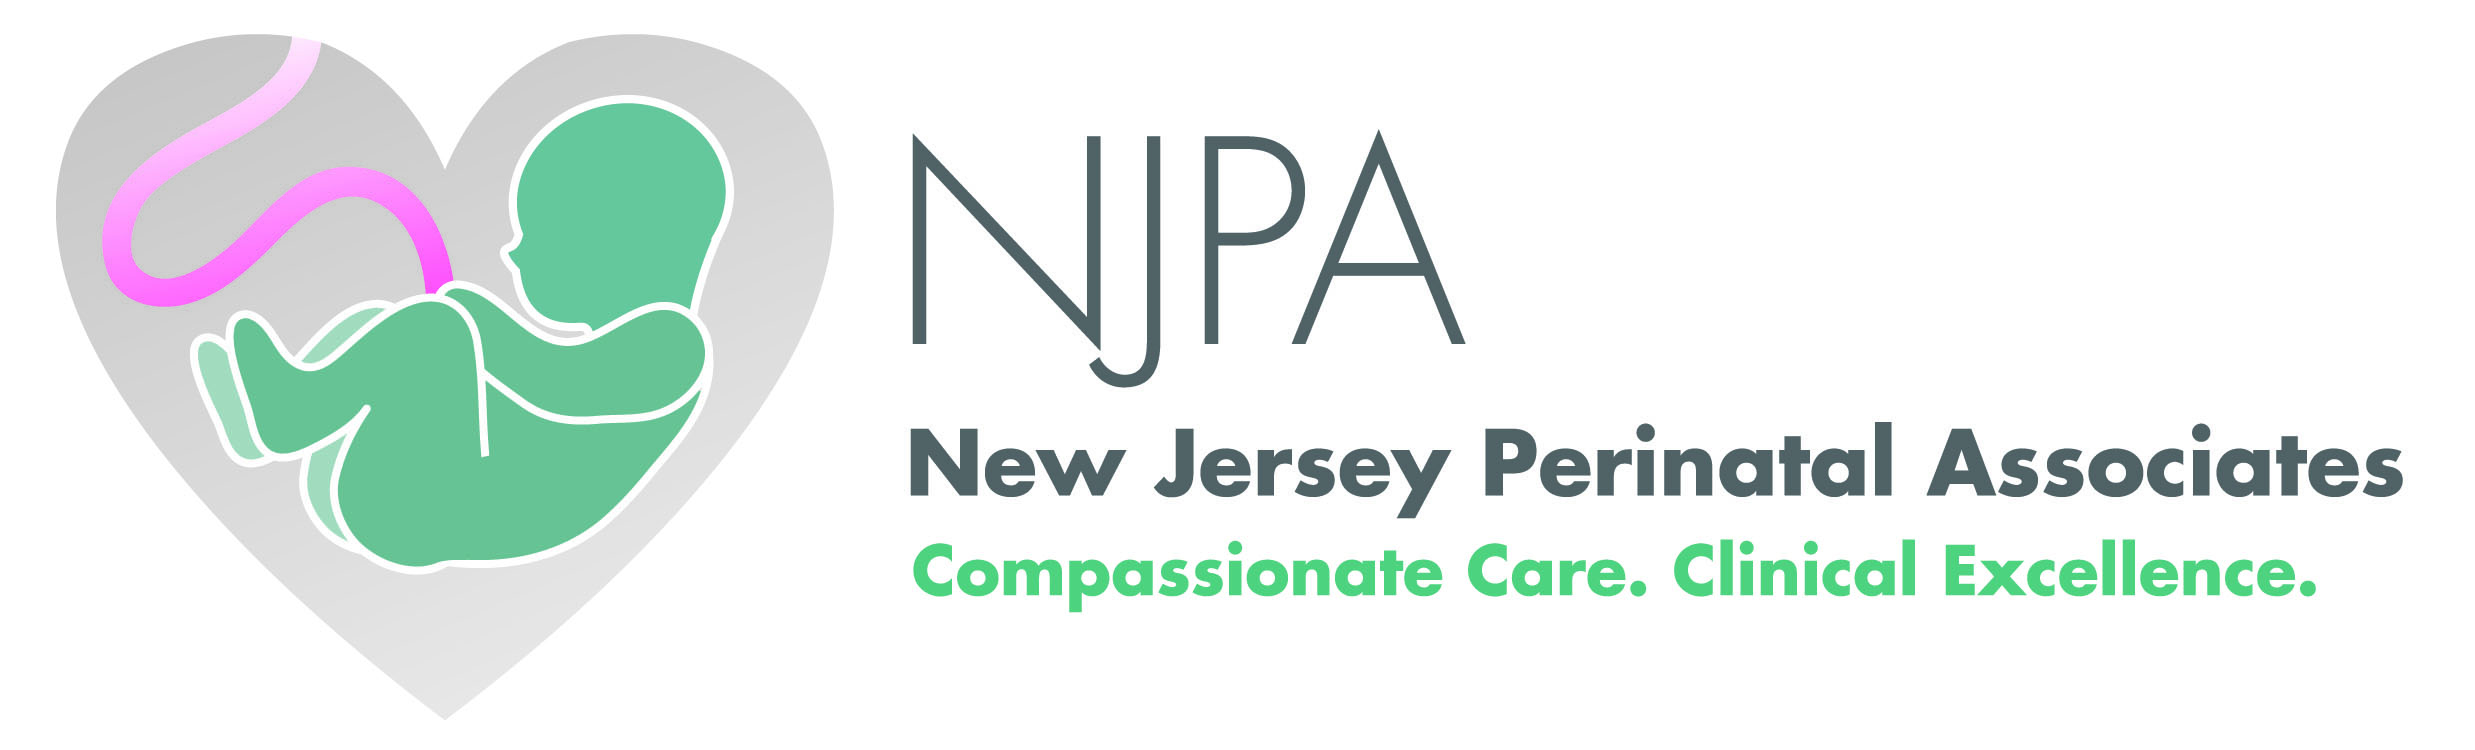 New Jersey Perinatal Associates